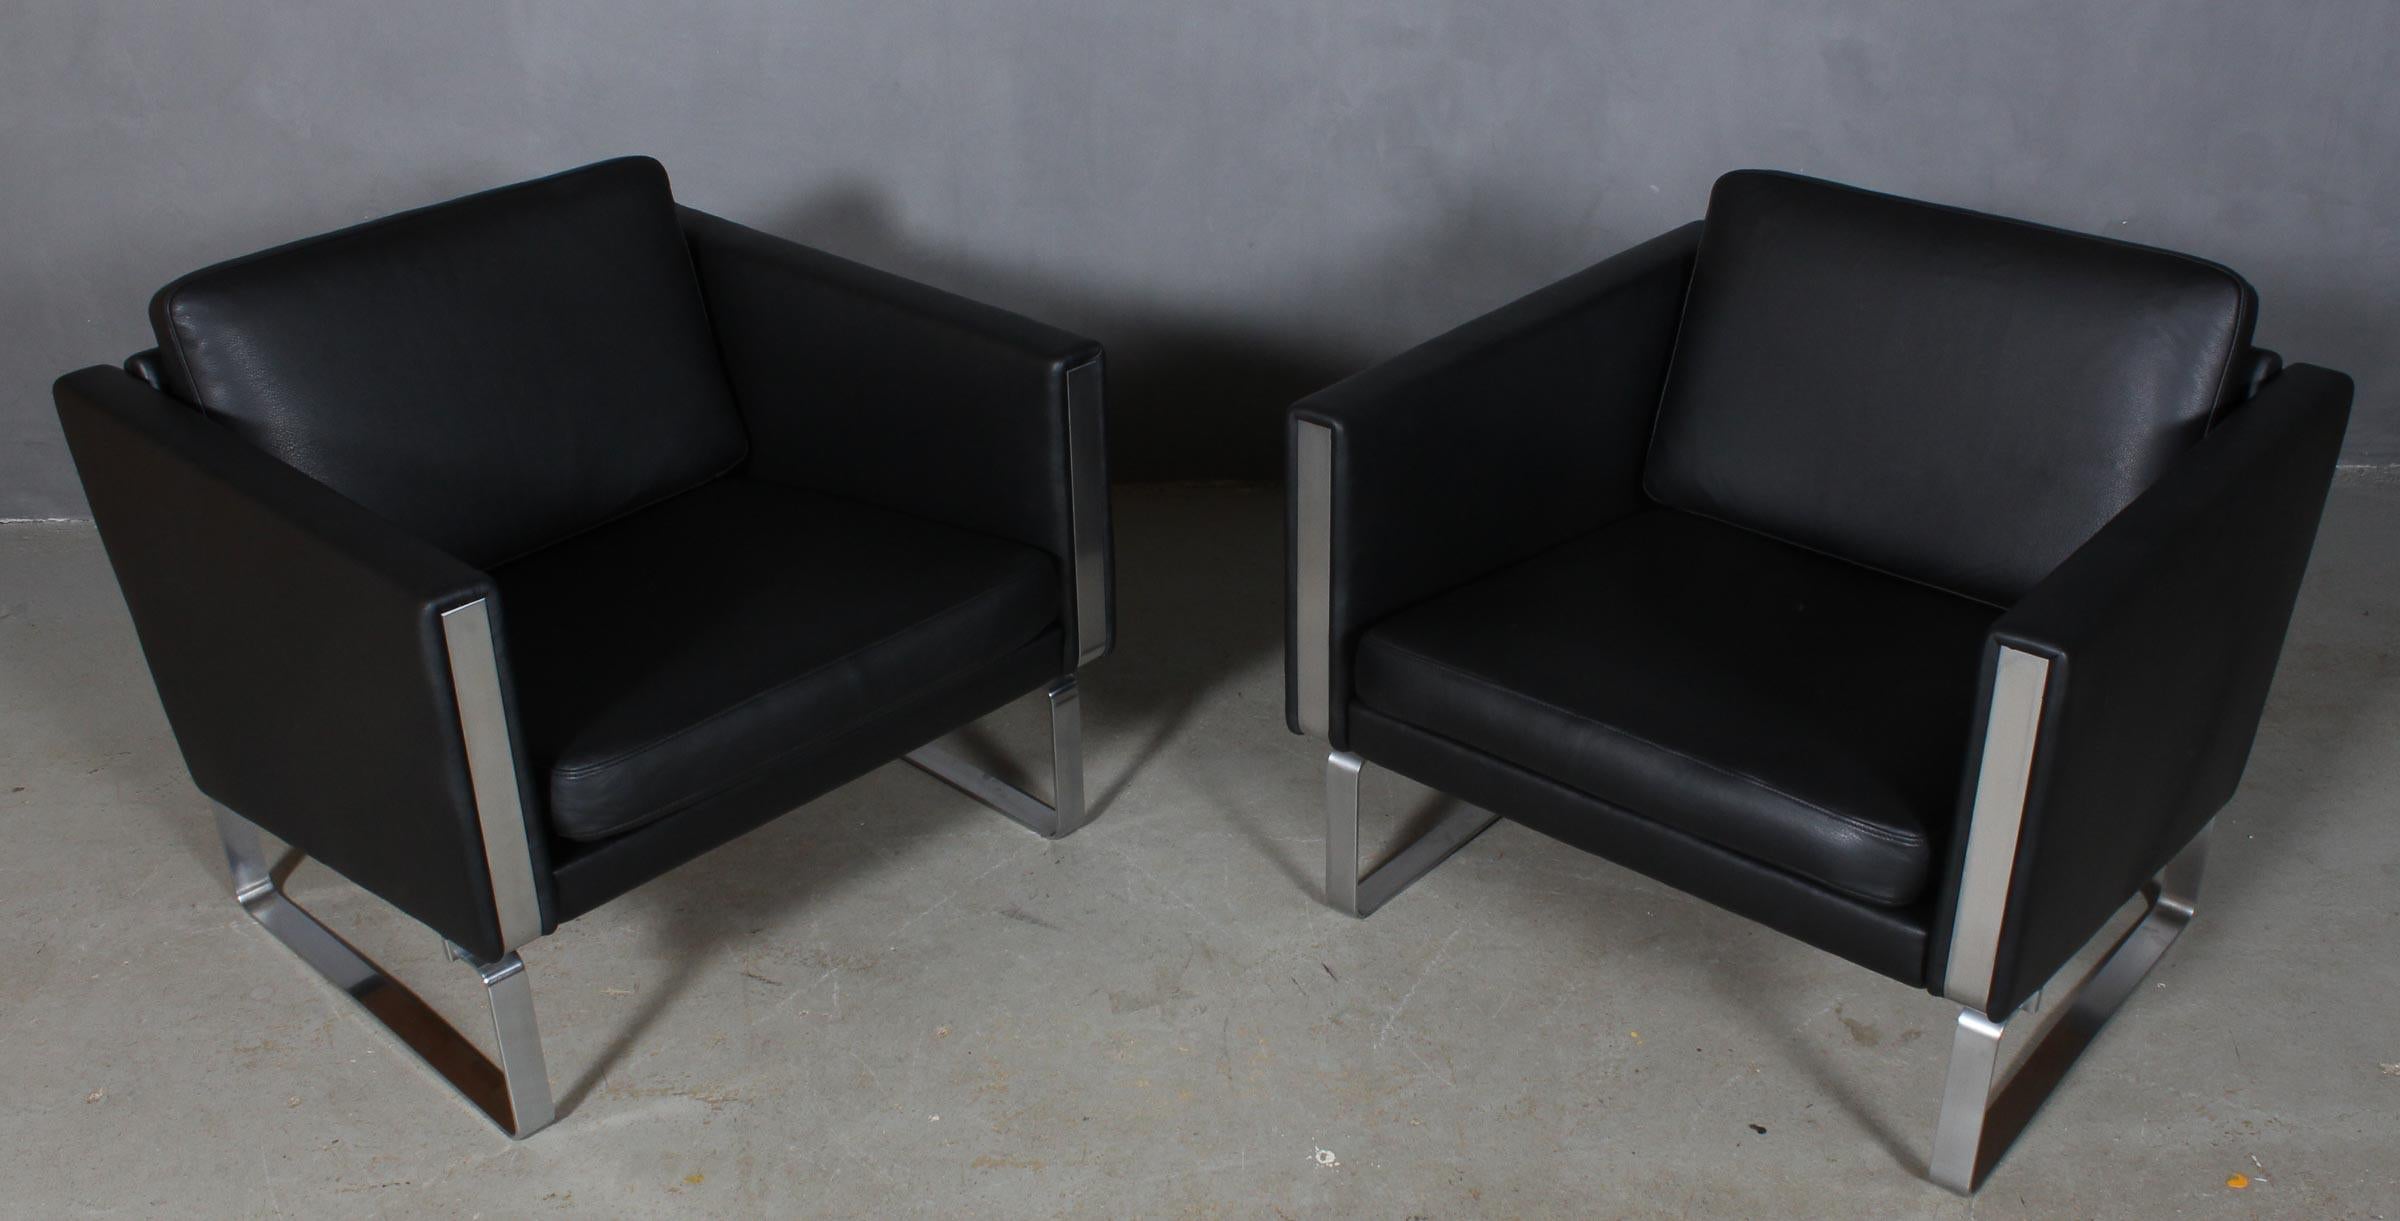 Hans J. Wegner armchair new upholstered with black aniline leather.

Frame of brushed steel

Model JH-101, made by Johannes Hansen.